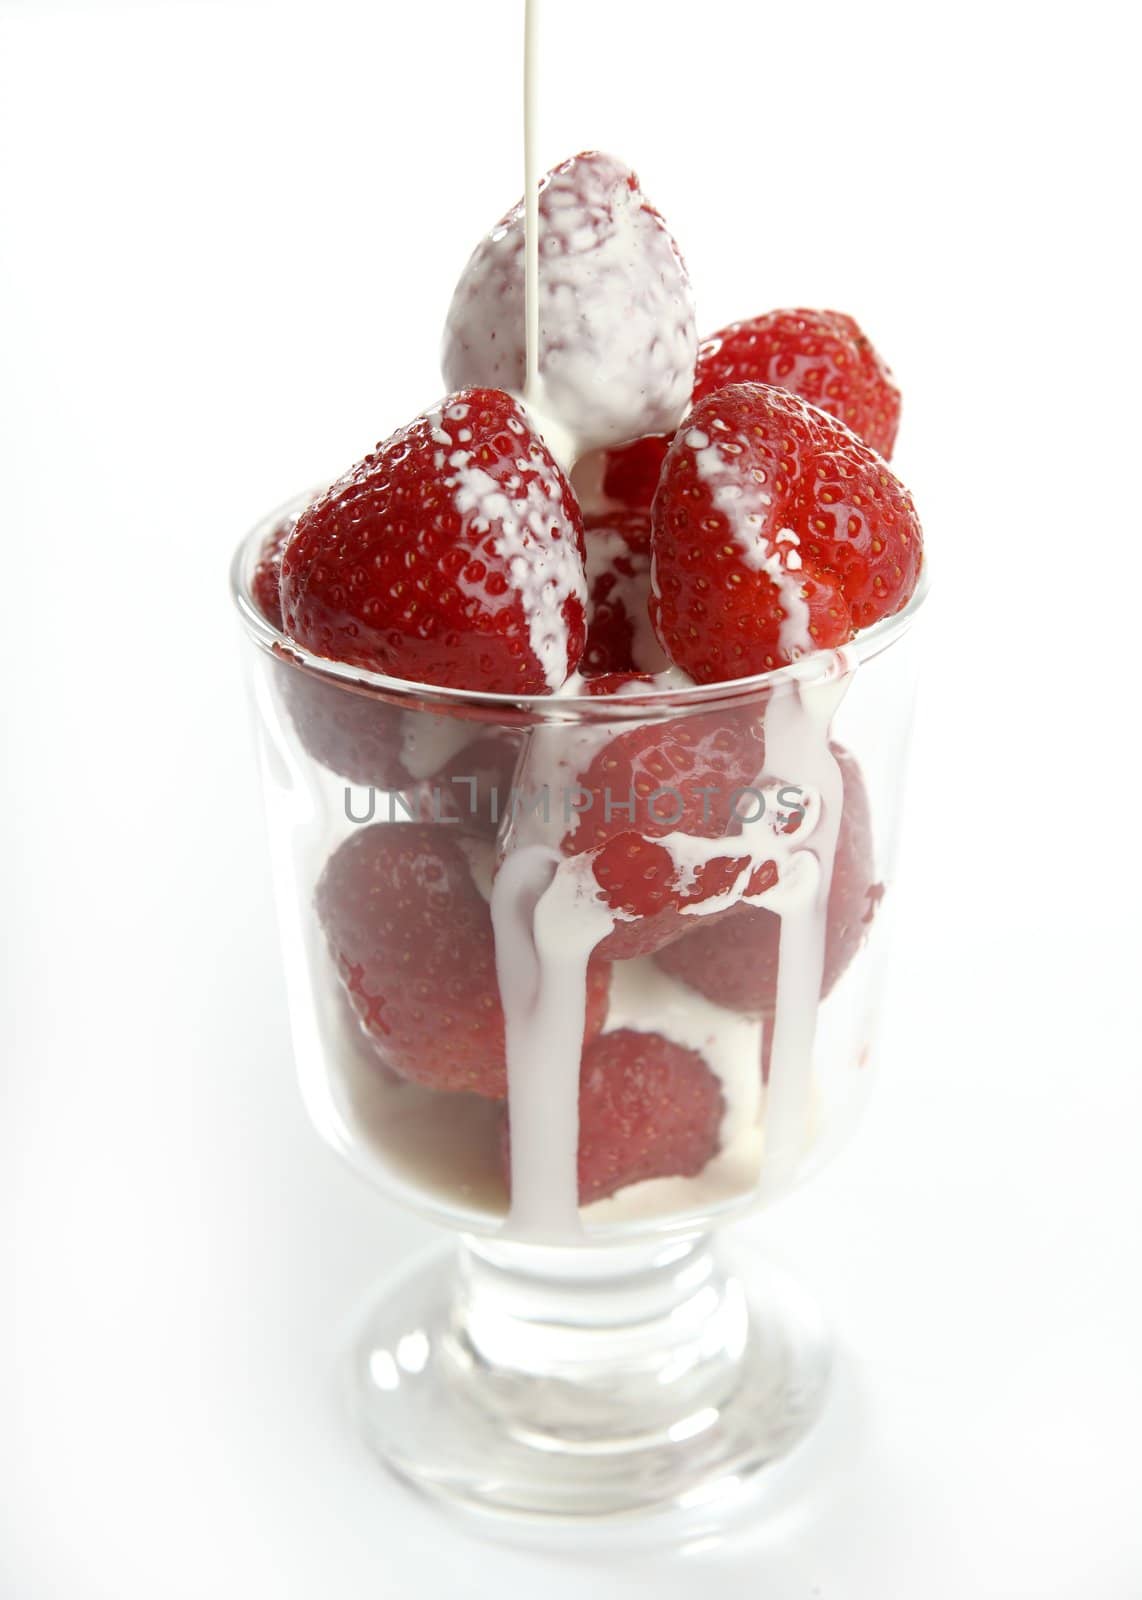 Glass full of delicious Strawberries and liquid cream